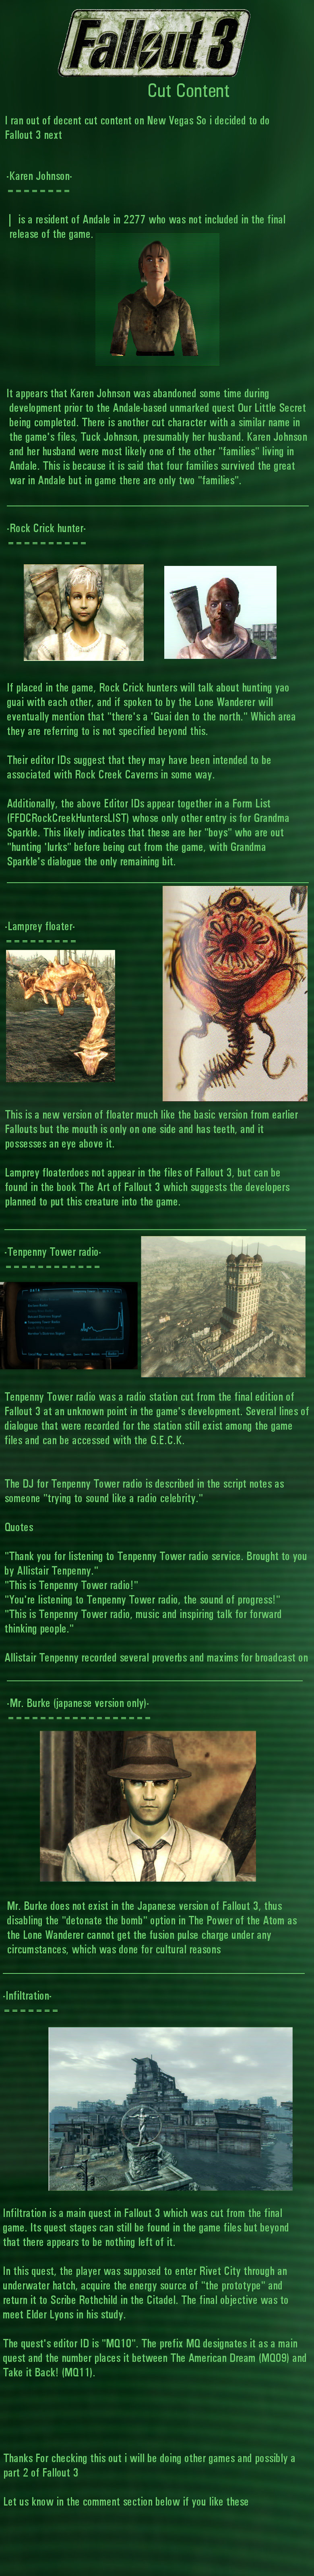 Fallout 1 Cut Content